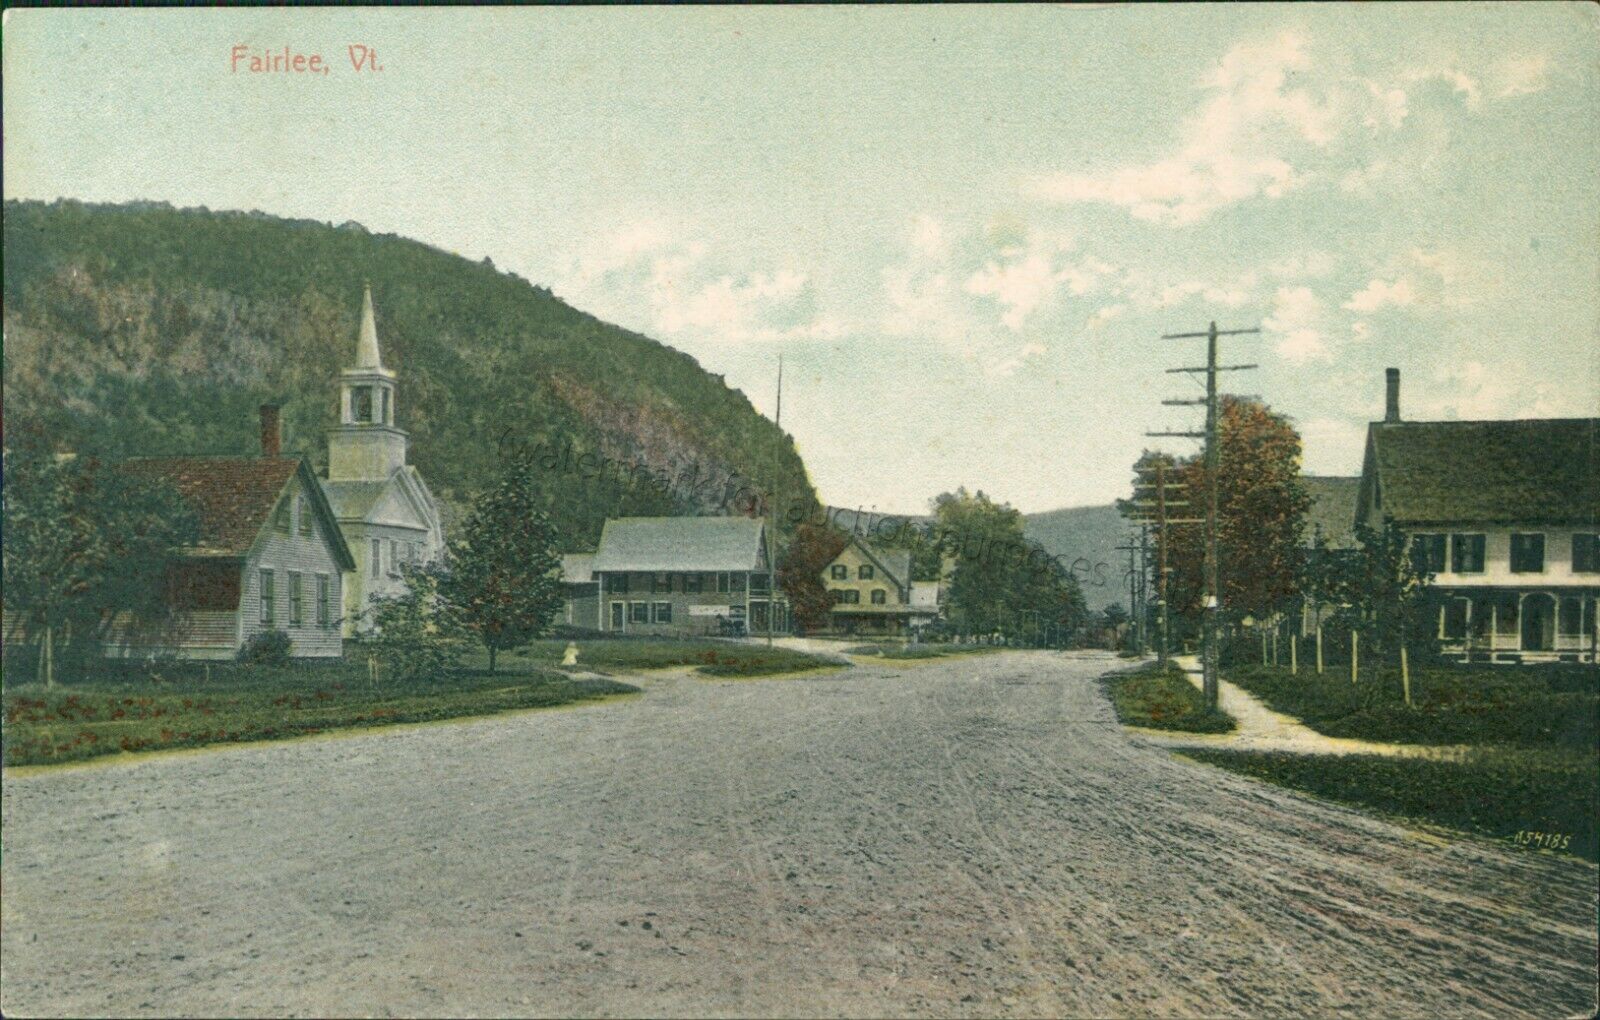 Fairlee, Vermont - 1908, *rare* vintage small town Orange County, VT Postcard